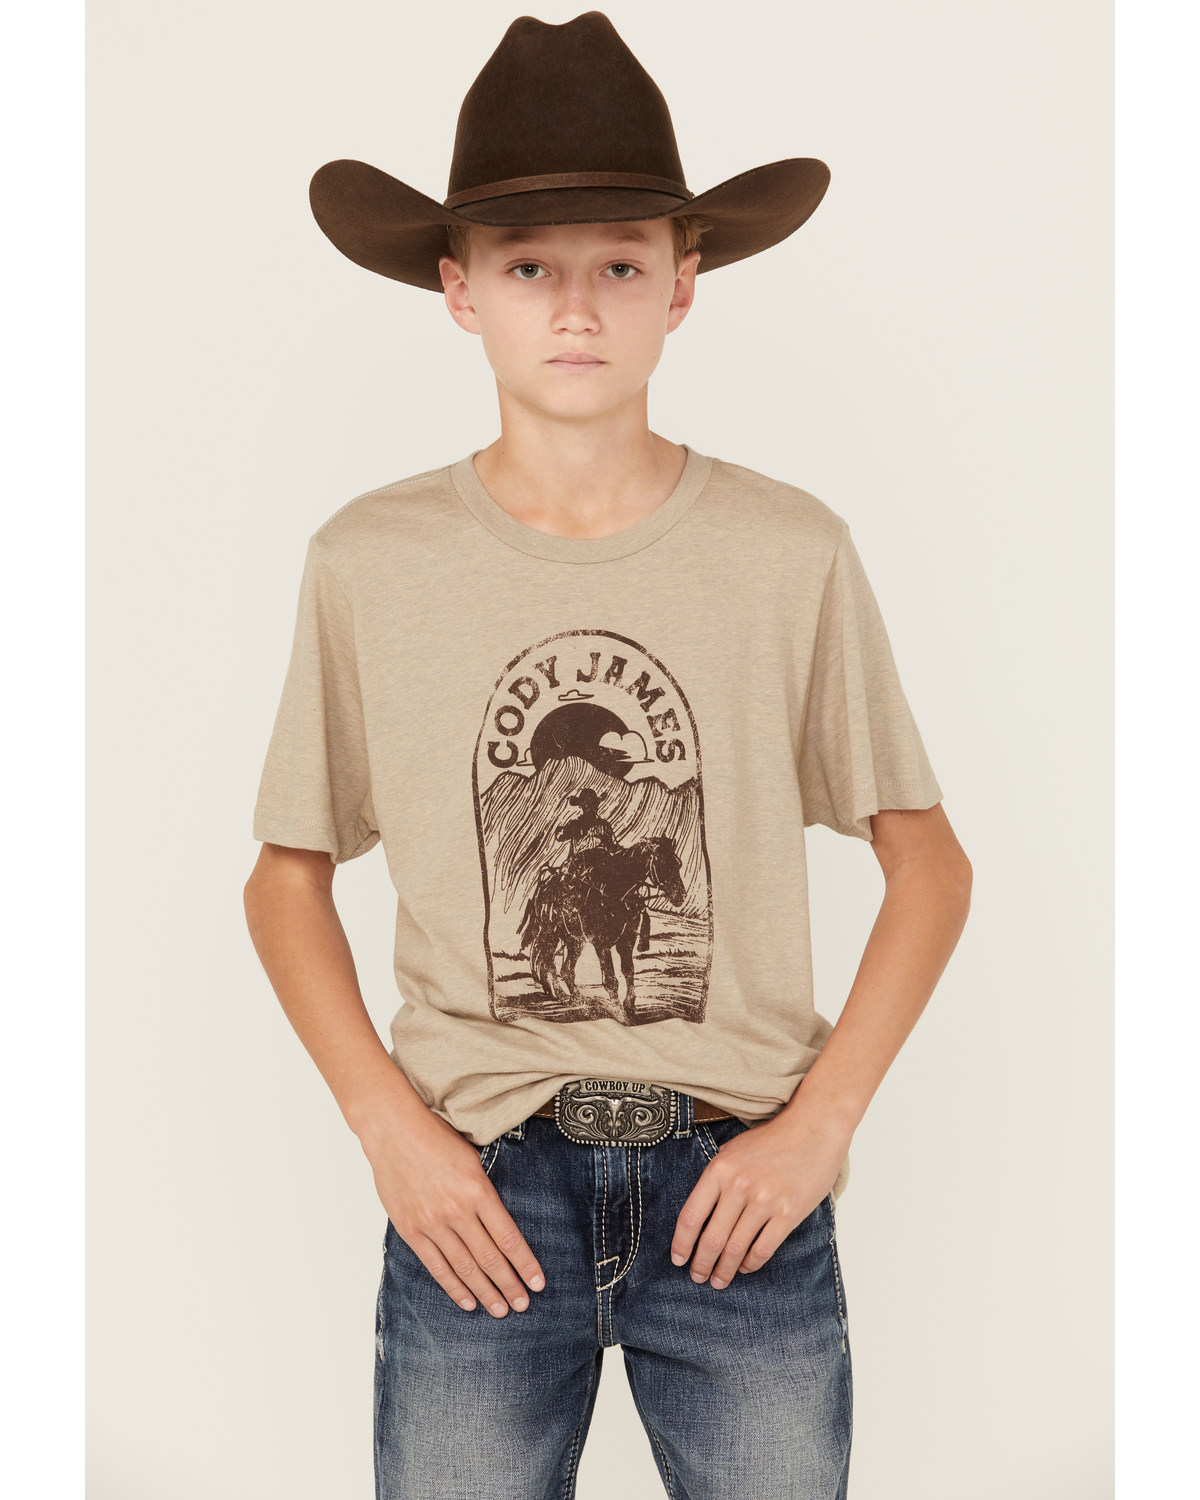 Cody James Boys' Cowboy Sketch Short Sleeve Graphic T-Shirt